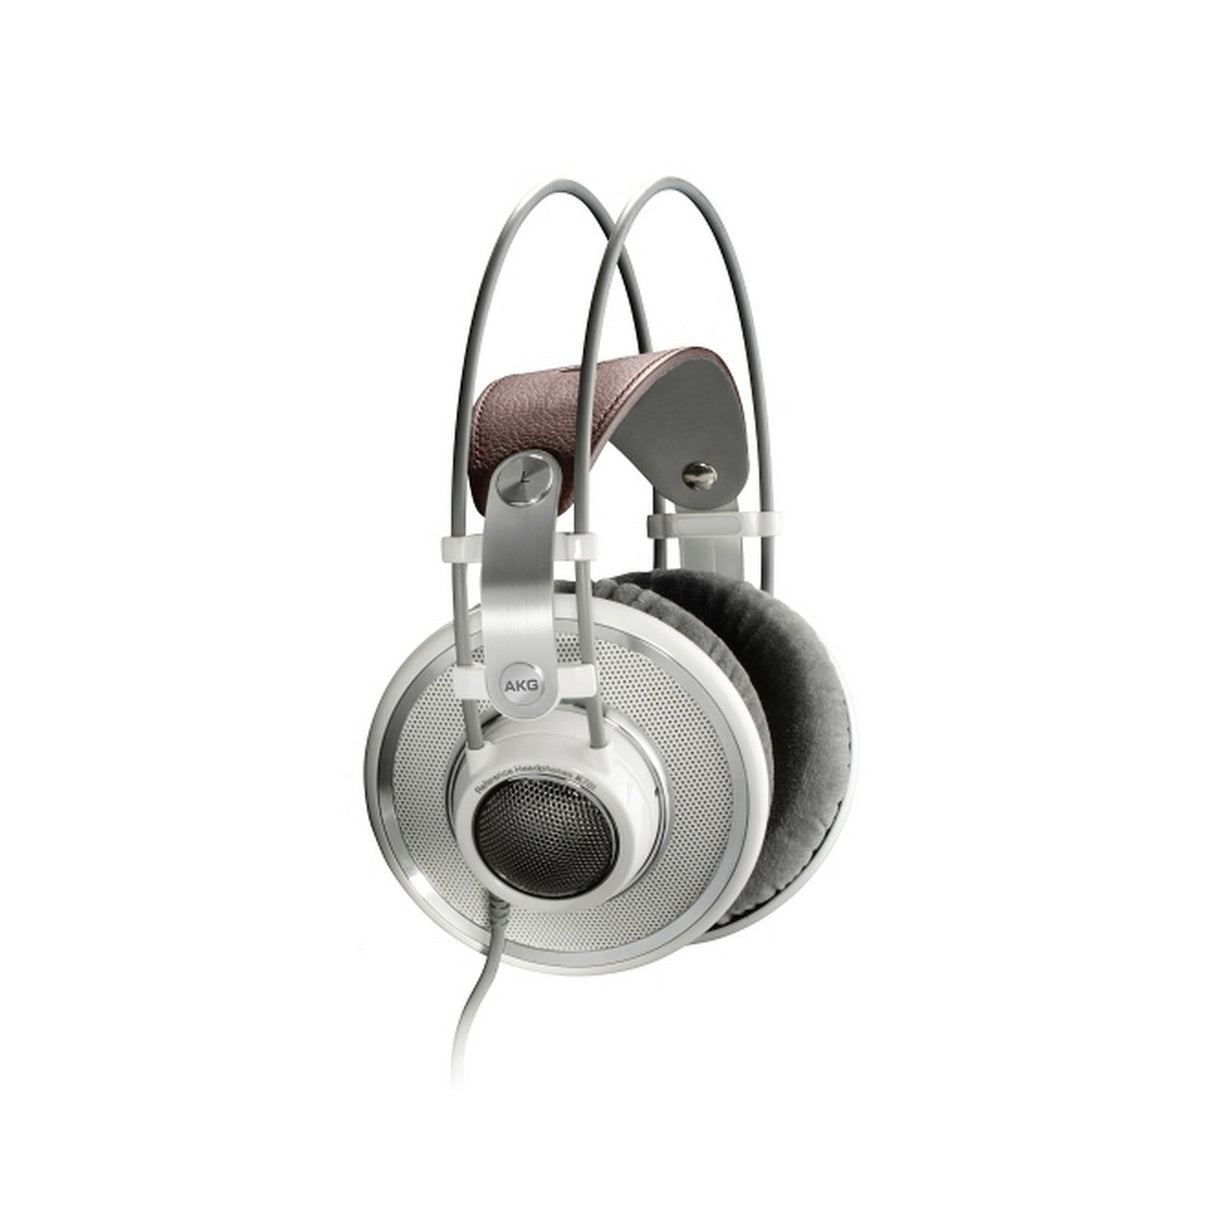 AKG K701 Audiophile Reference Class Hi-Fi Headphones